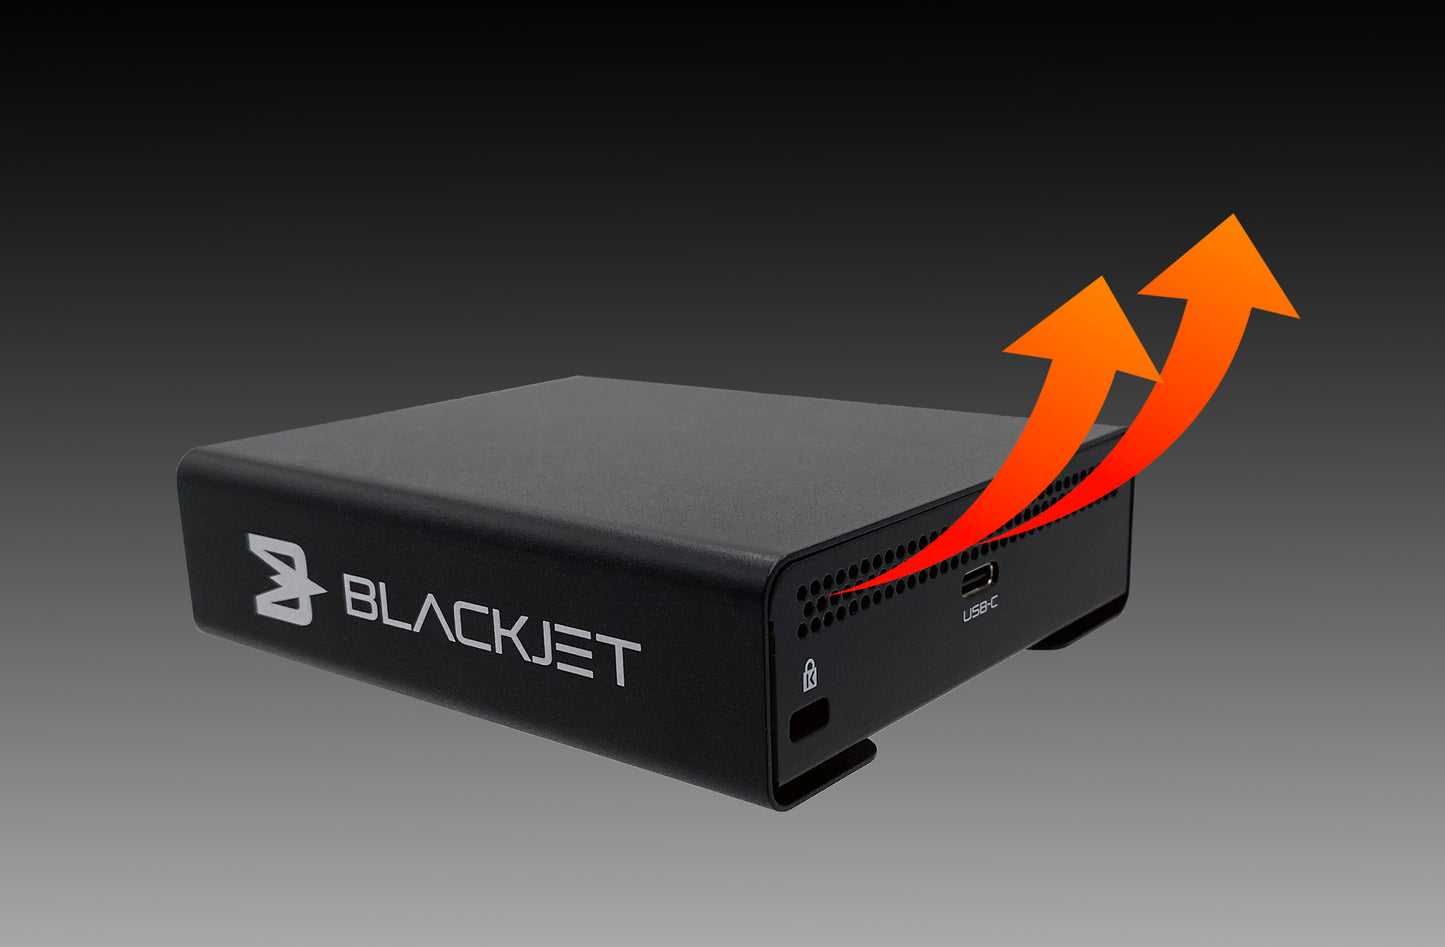 BLACKJET VX-1P AJA PAK MEDIA USB 3.2 Gen 2 リーダー